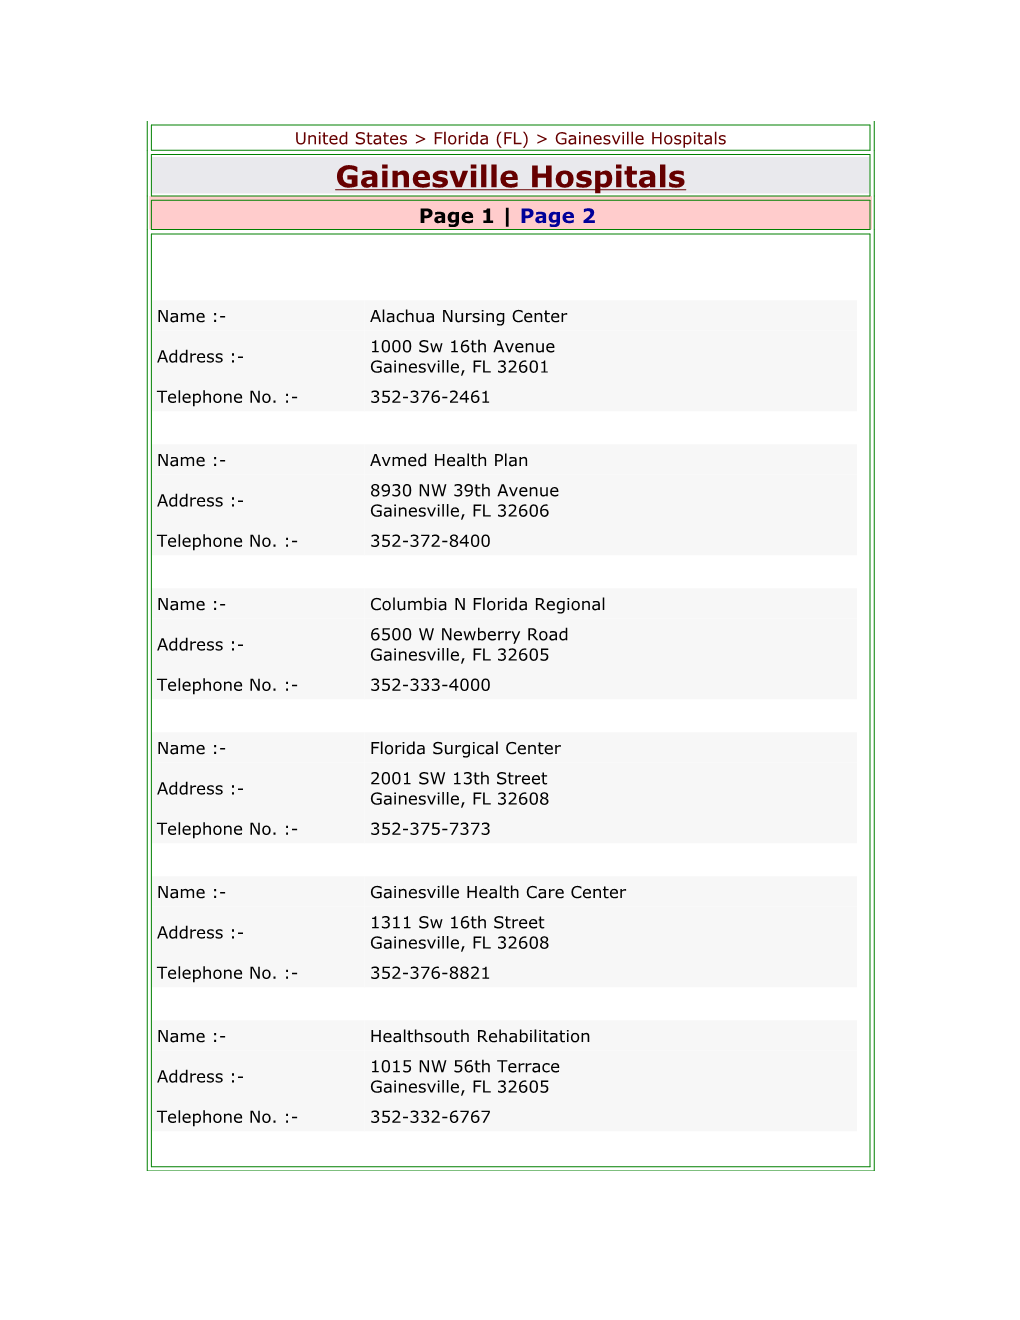 United States Florida (FL) Gainesville Hospitals